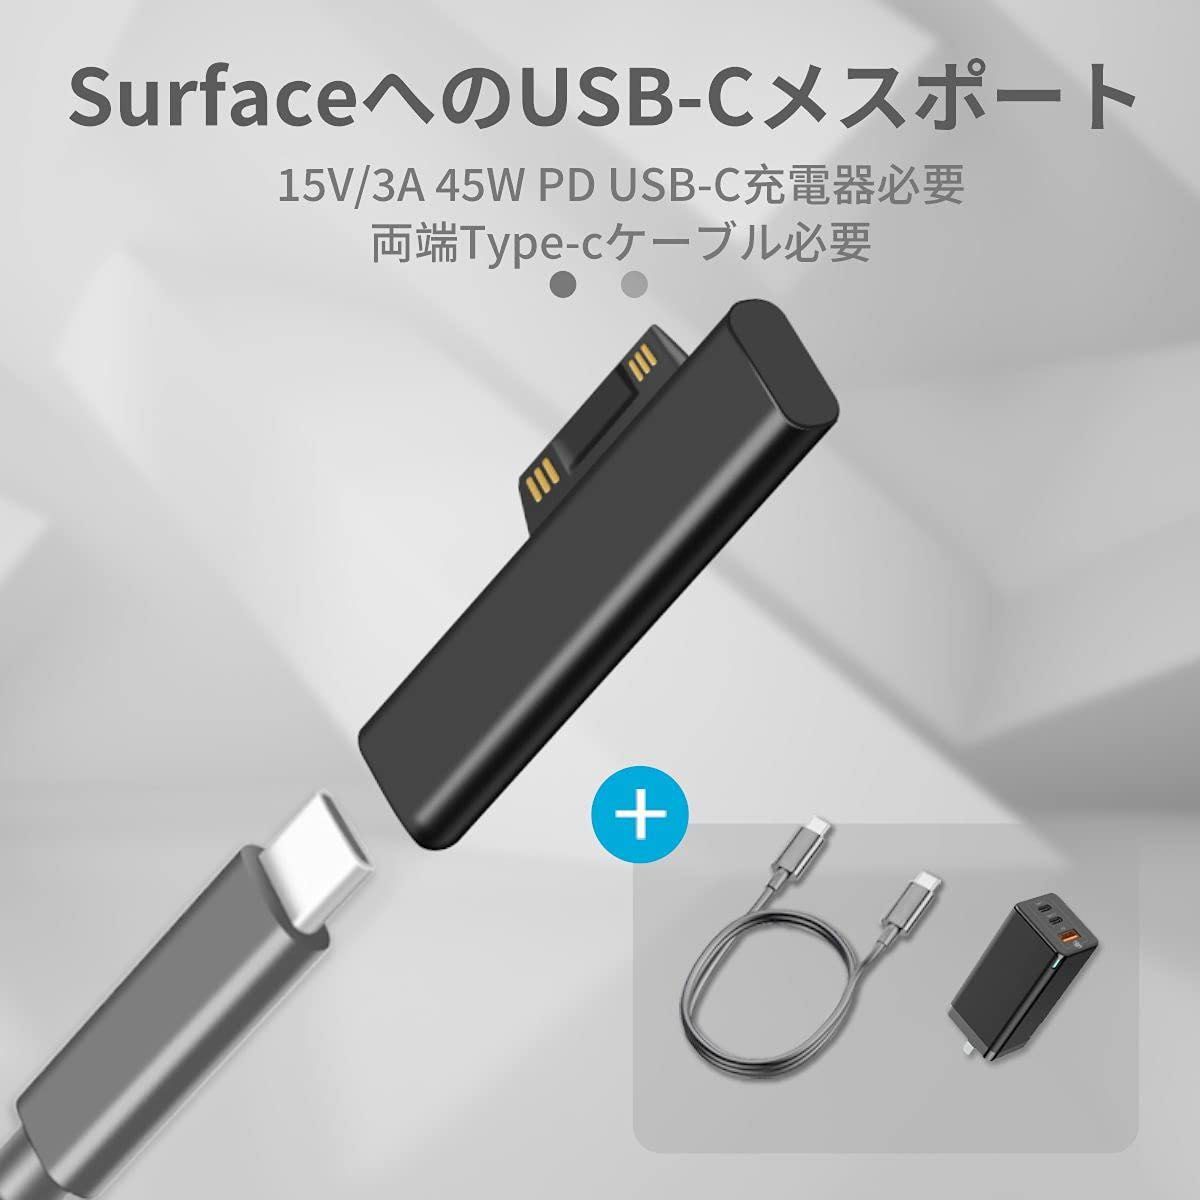 USB-C to Surface Pro 急速充電アダプタ、15V/3A 45W PD USB-C充電器必要 両端Type-c